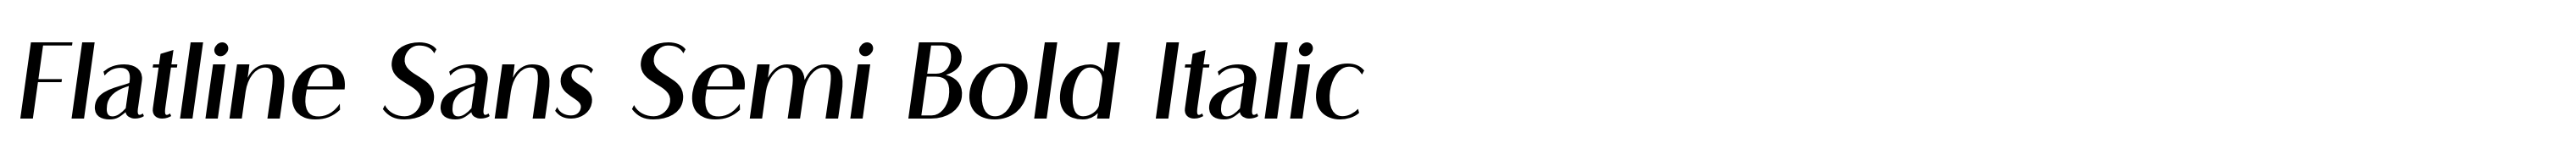 Flatline Sans Semi Bold Italic